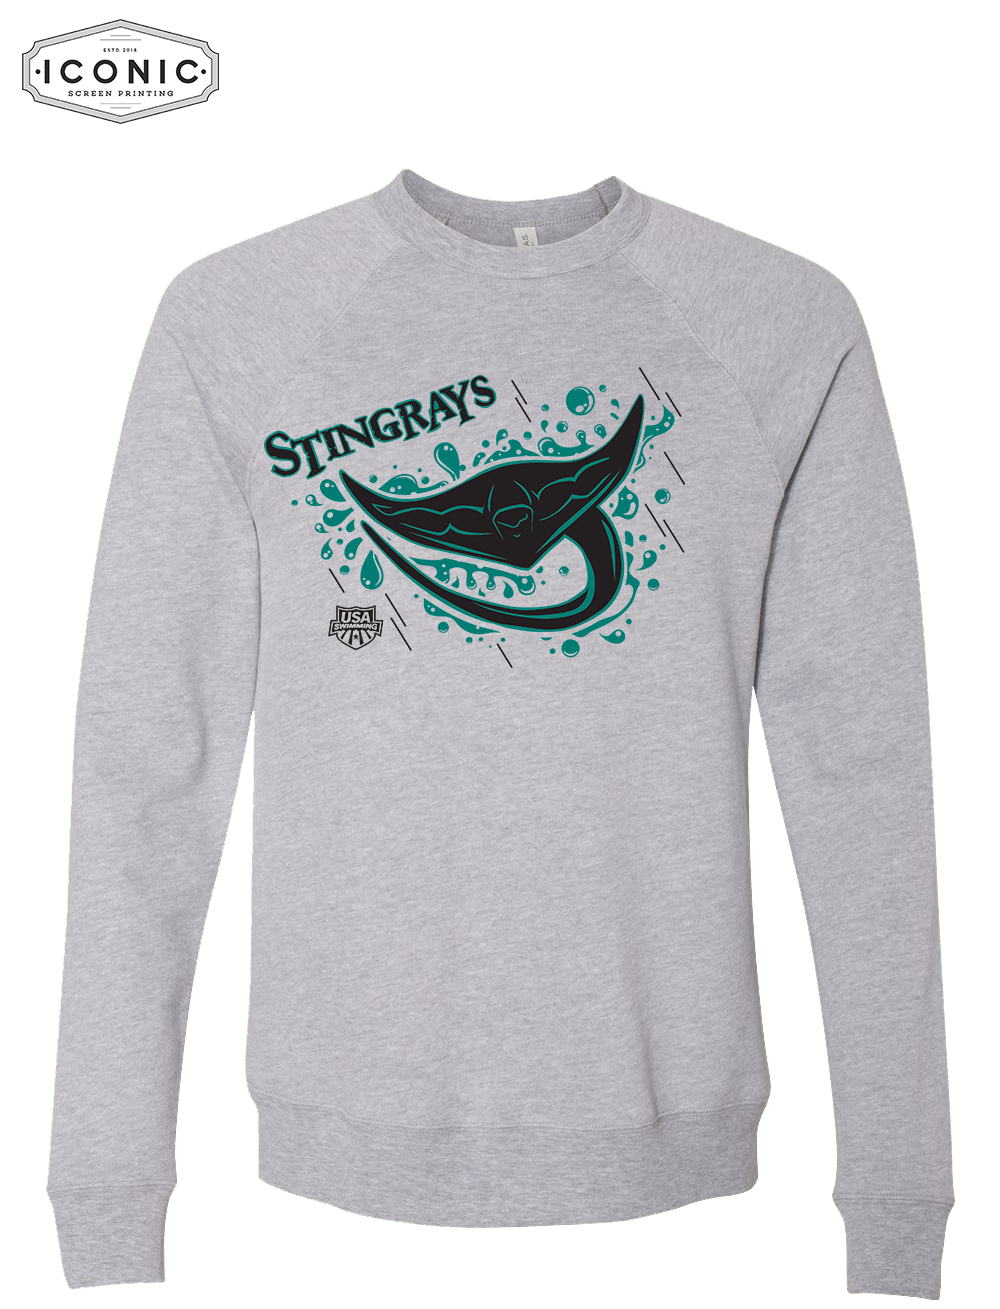 Stingrays - Unisex Sponge Fleece Raglan Crewneck Sweatshirt